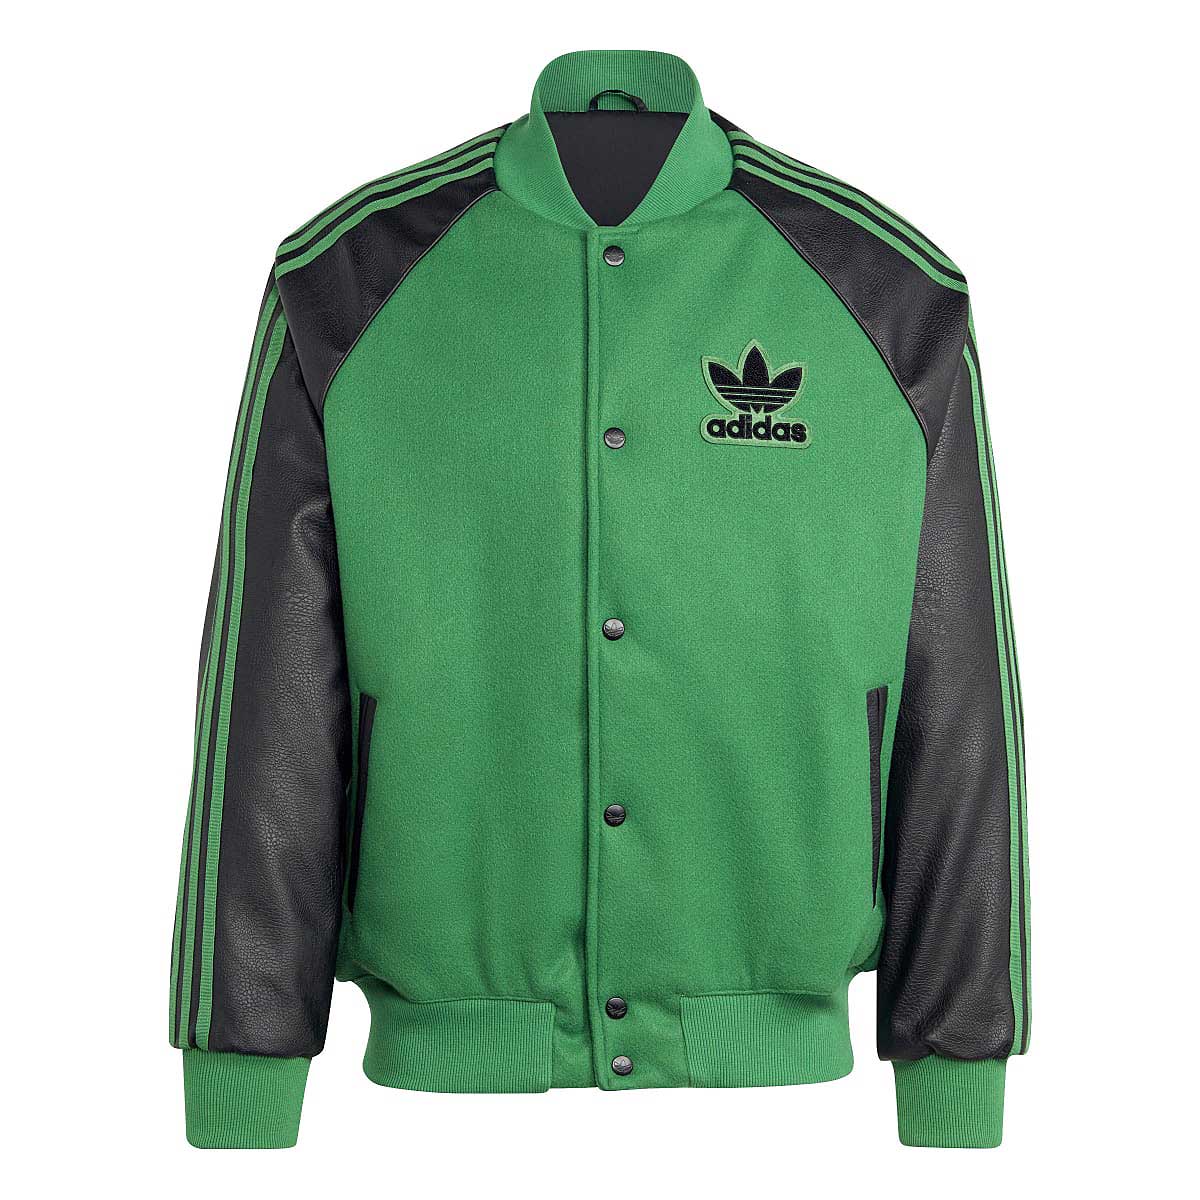 Image of Adidas Sst Varsity Jacket, Green/black